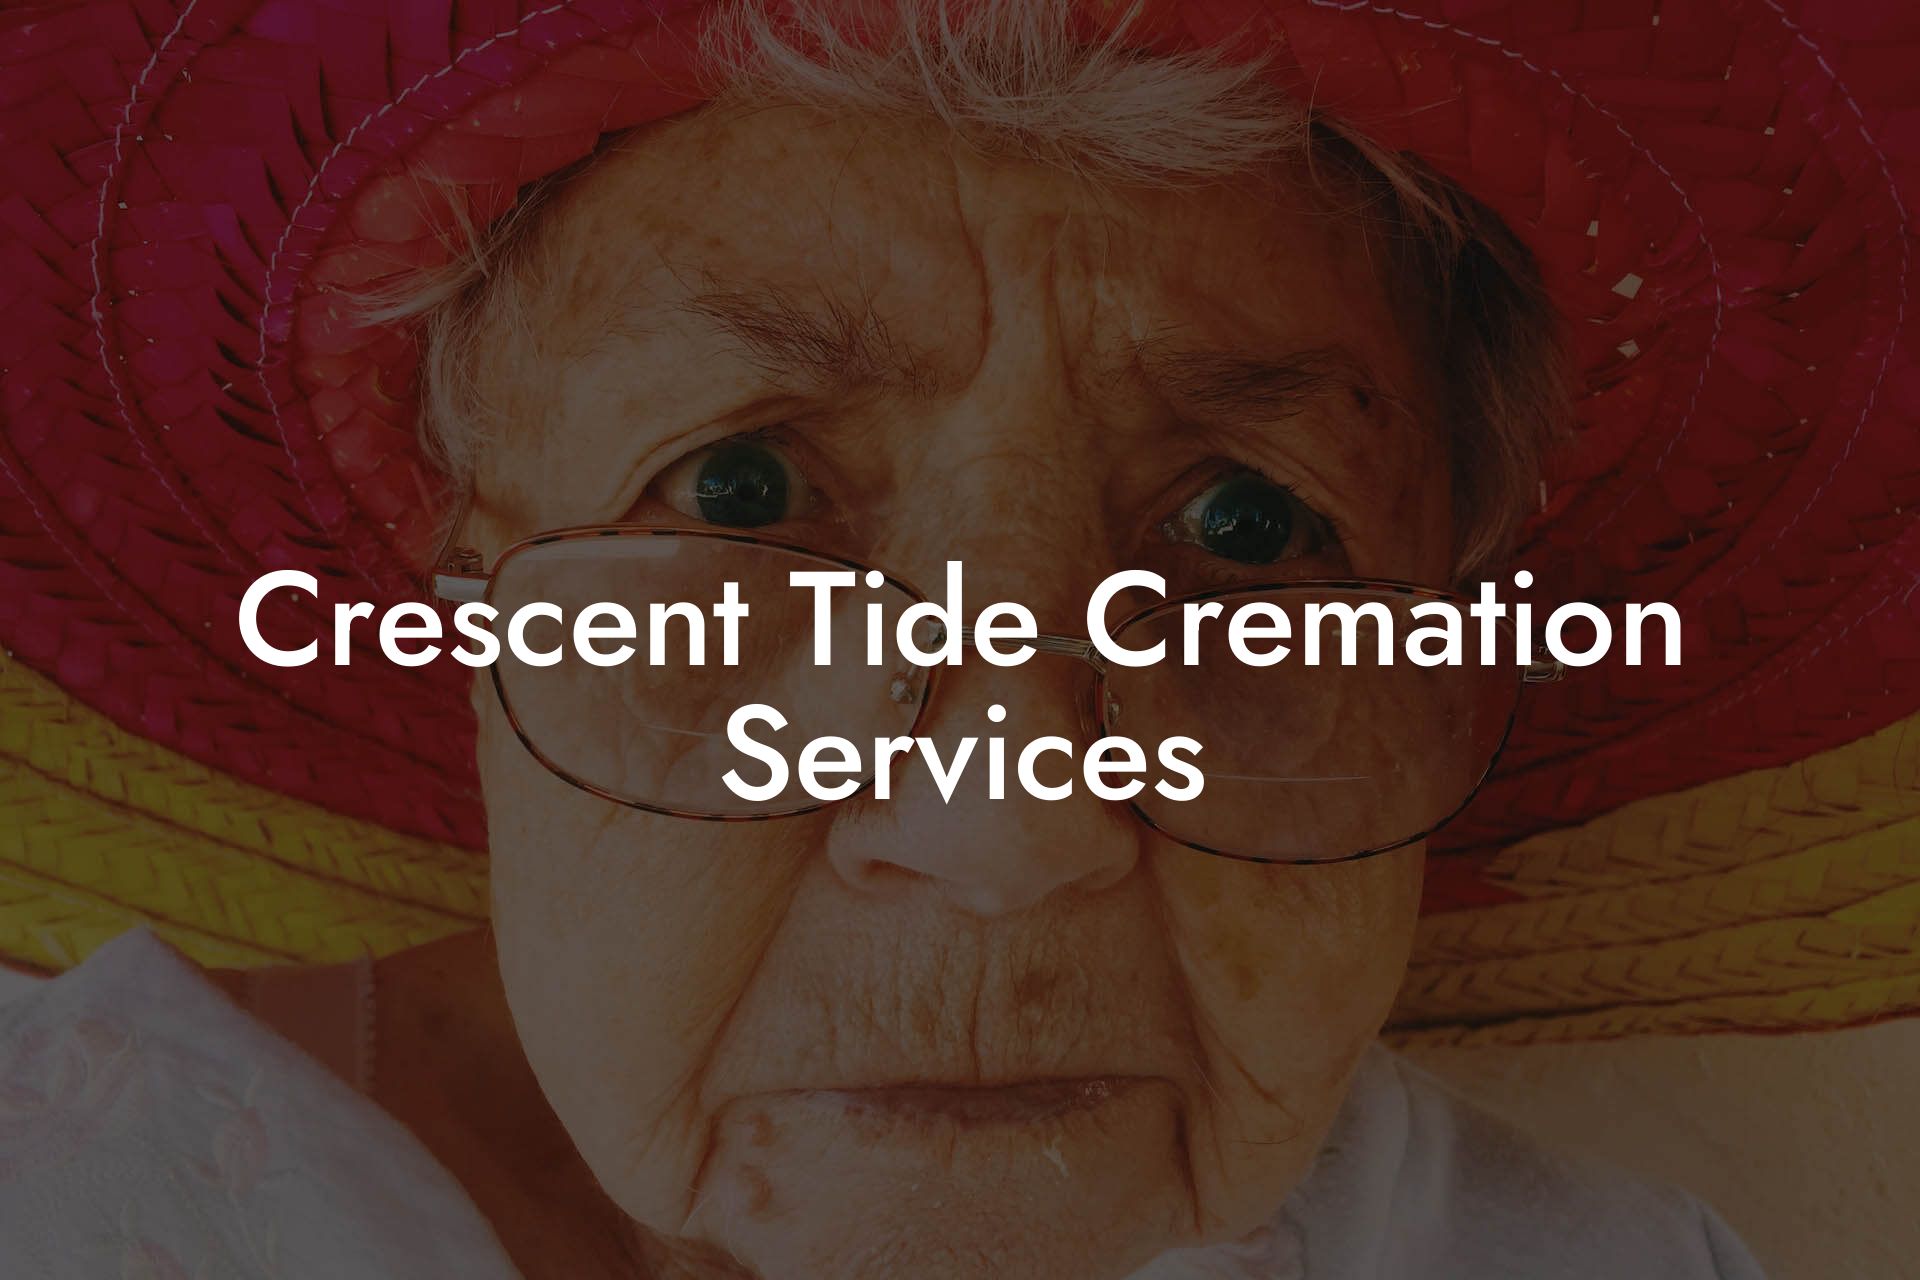 Crescent Tide Cremation Services